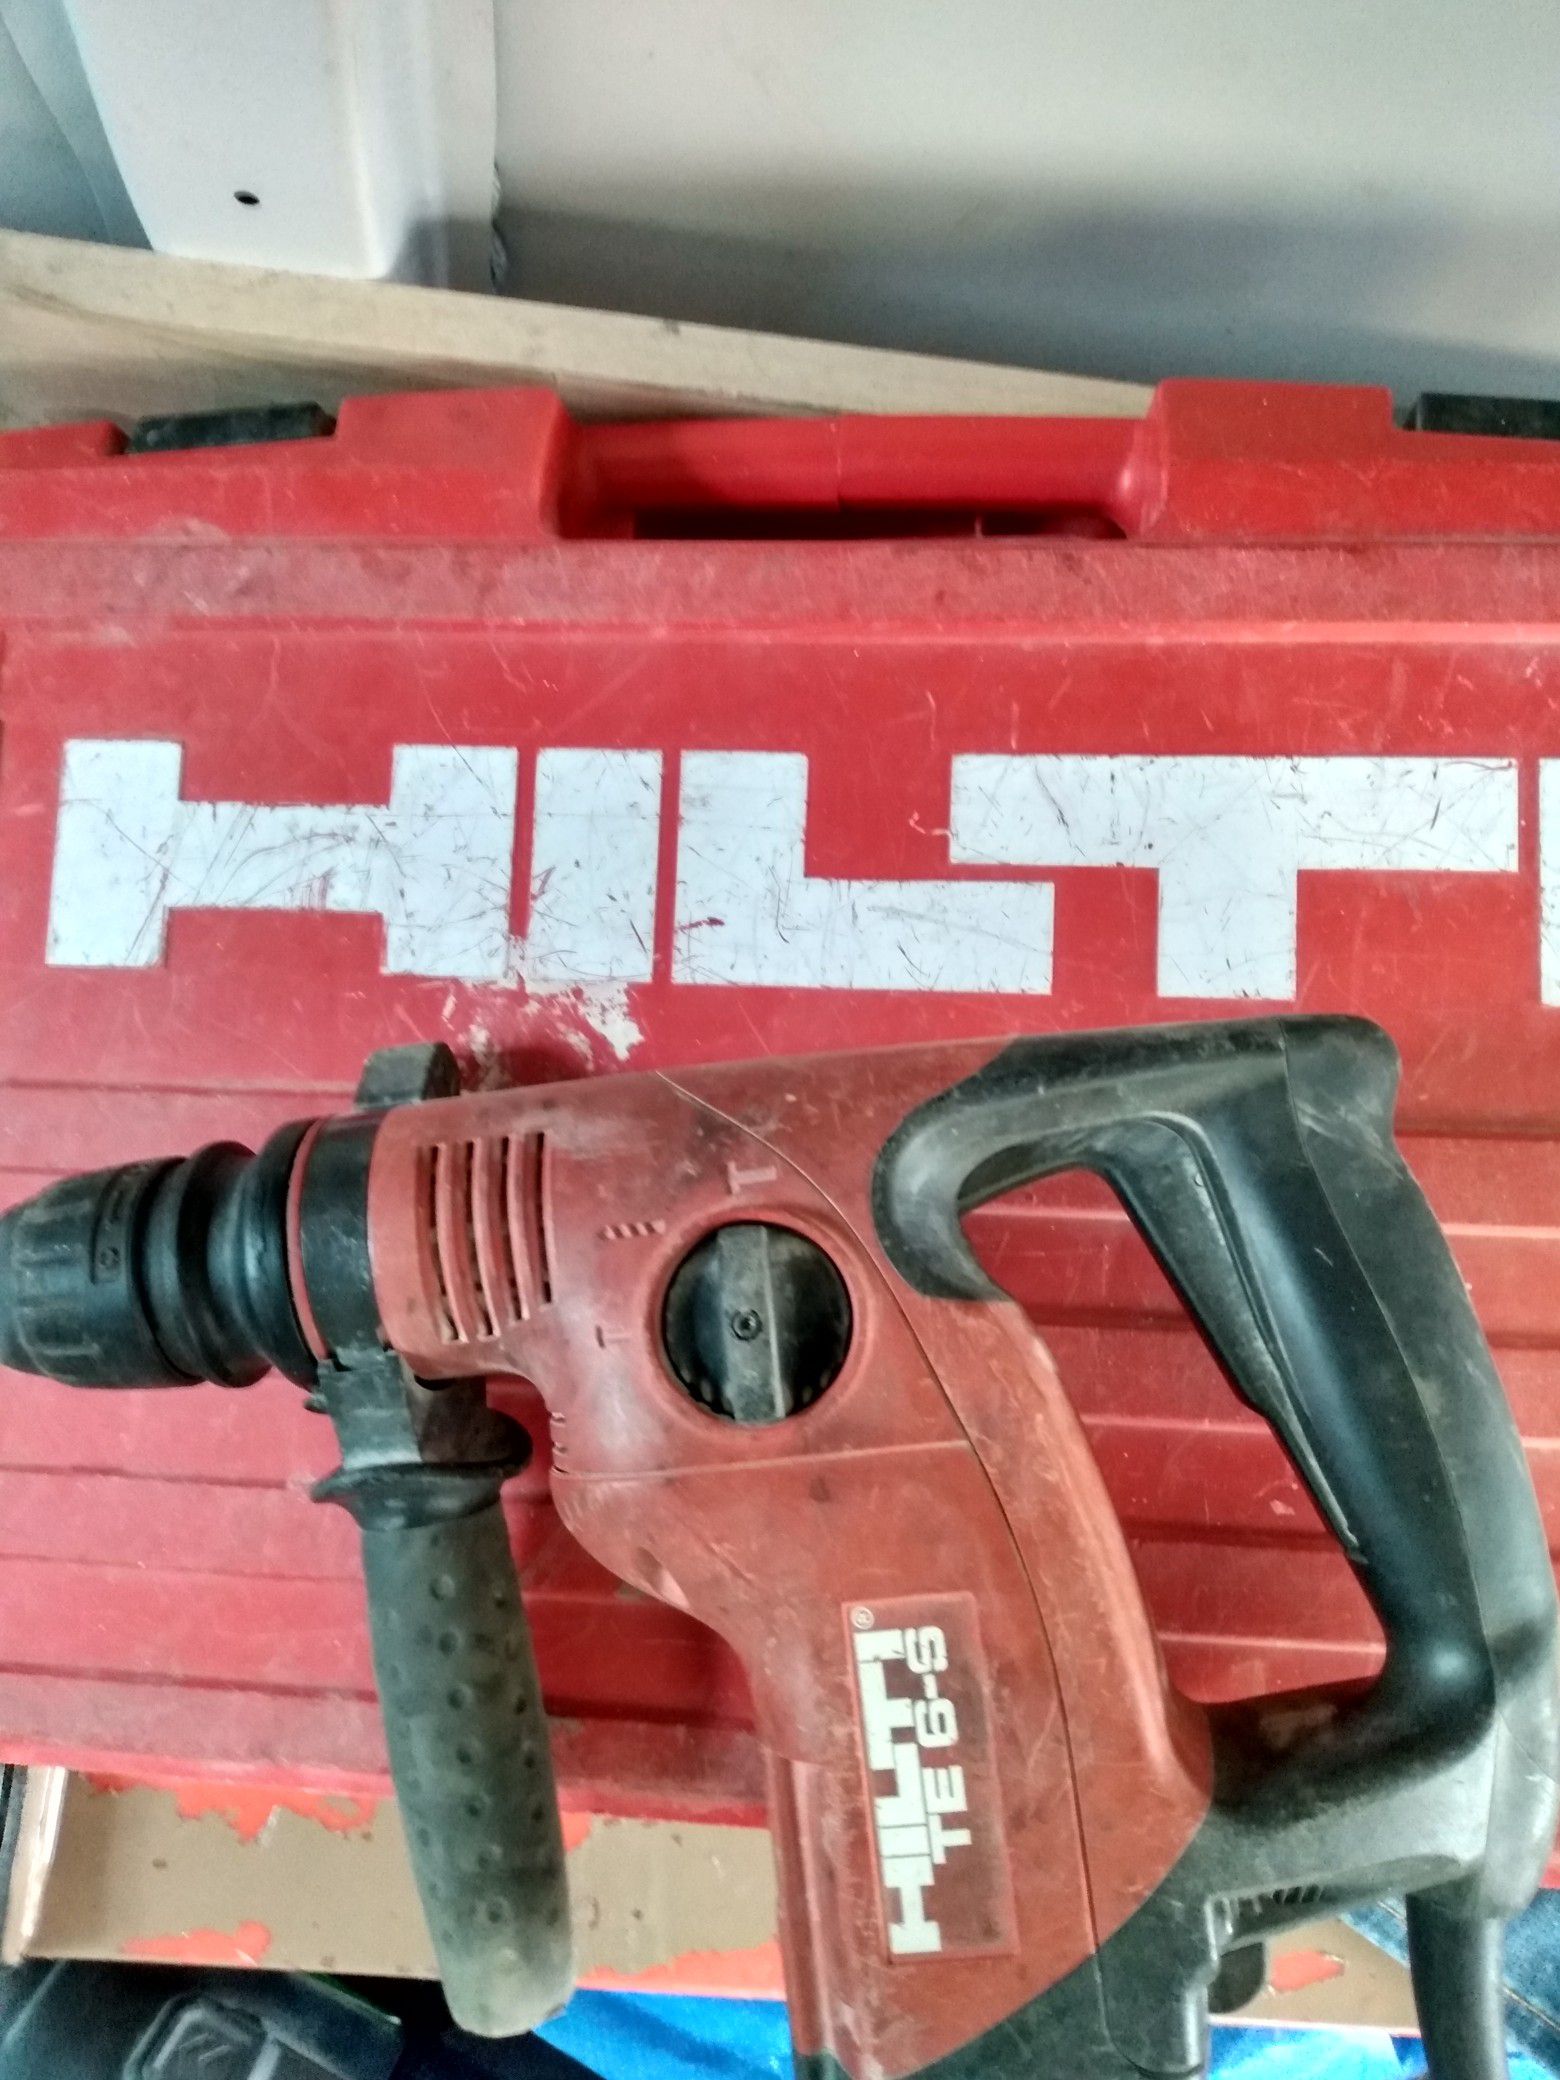 Hilti hammer drill